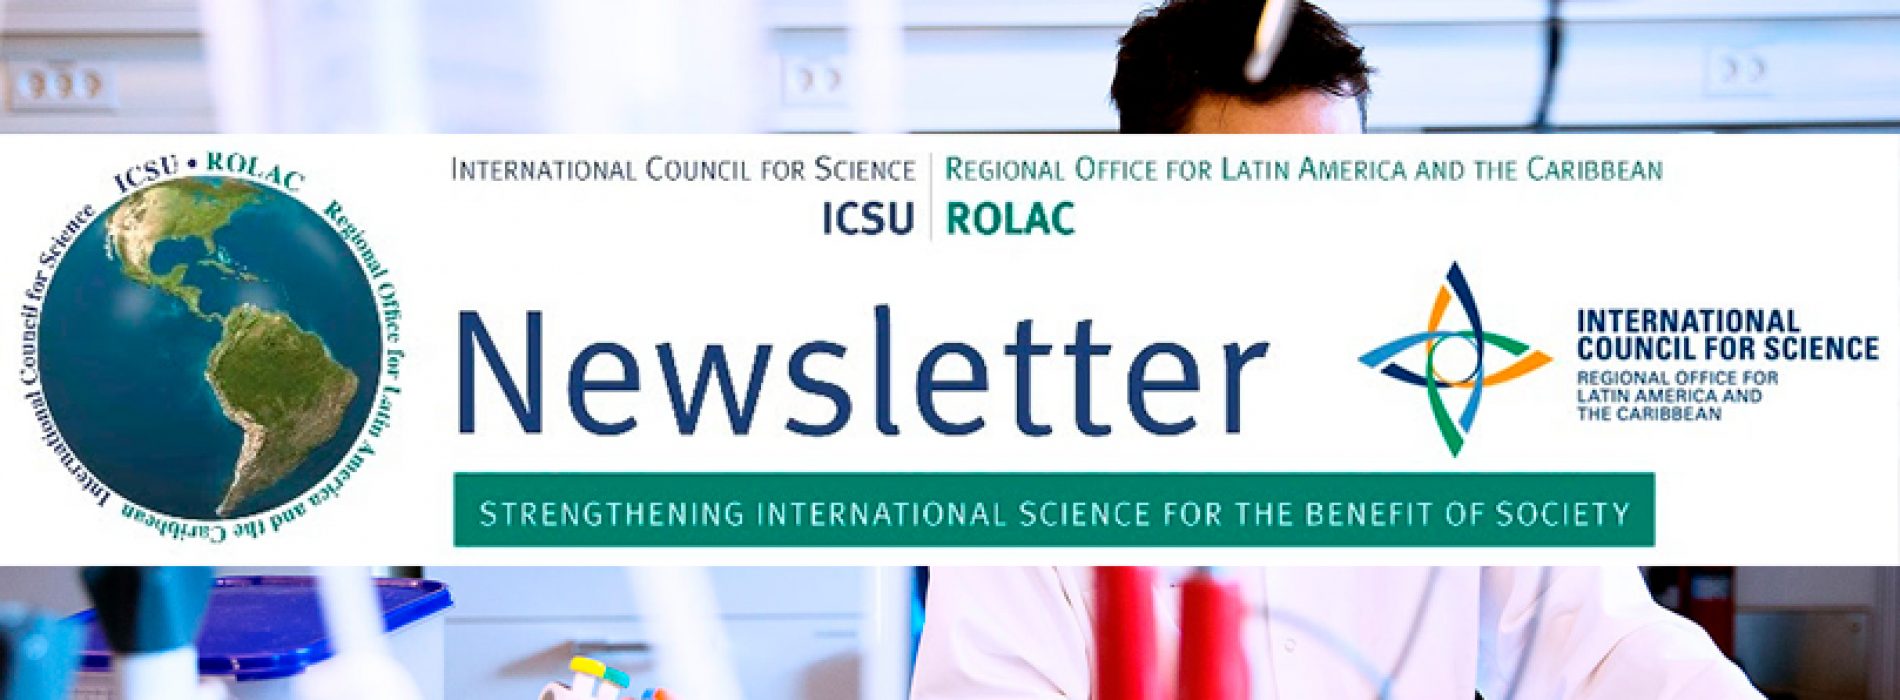 ICSU ROLAC Newsletter October 2017